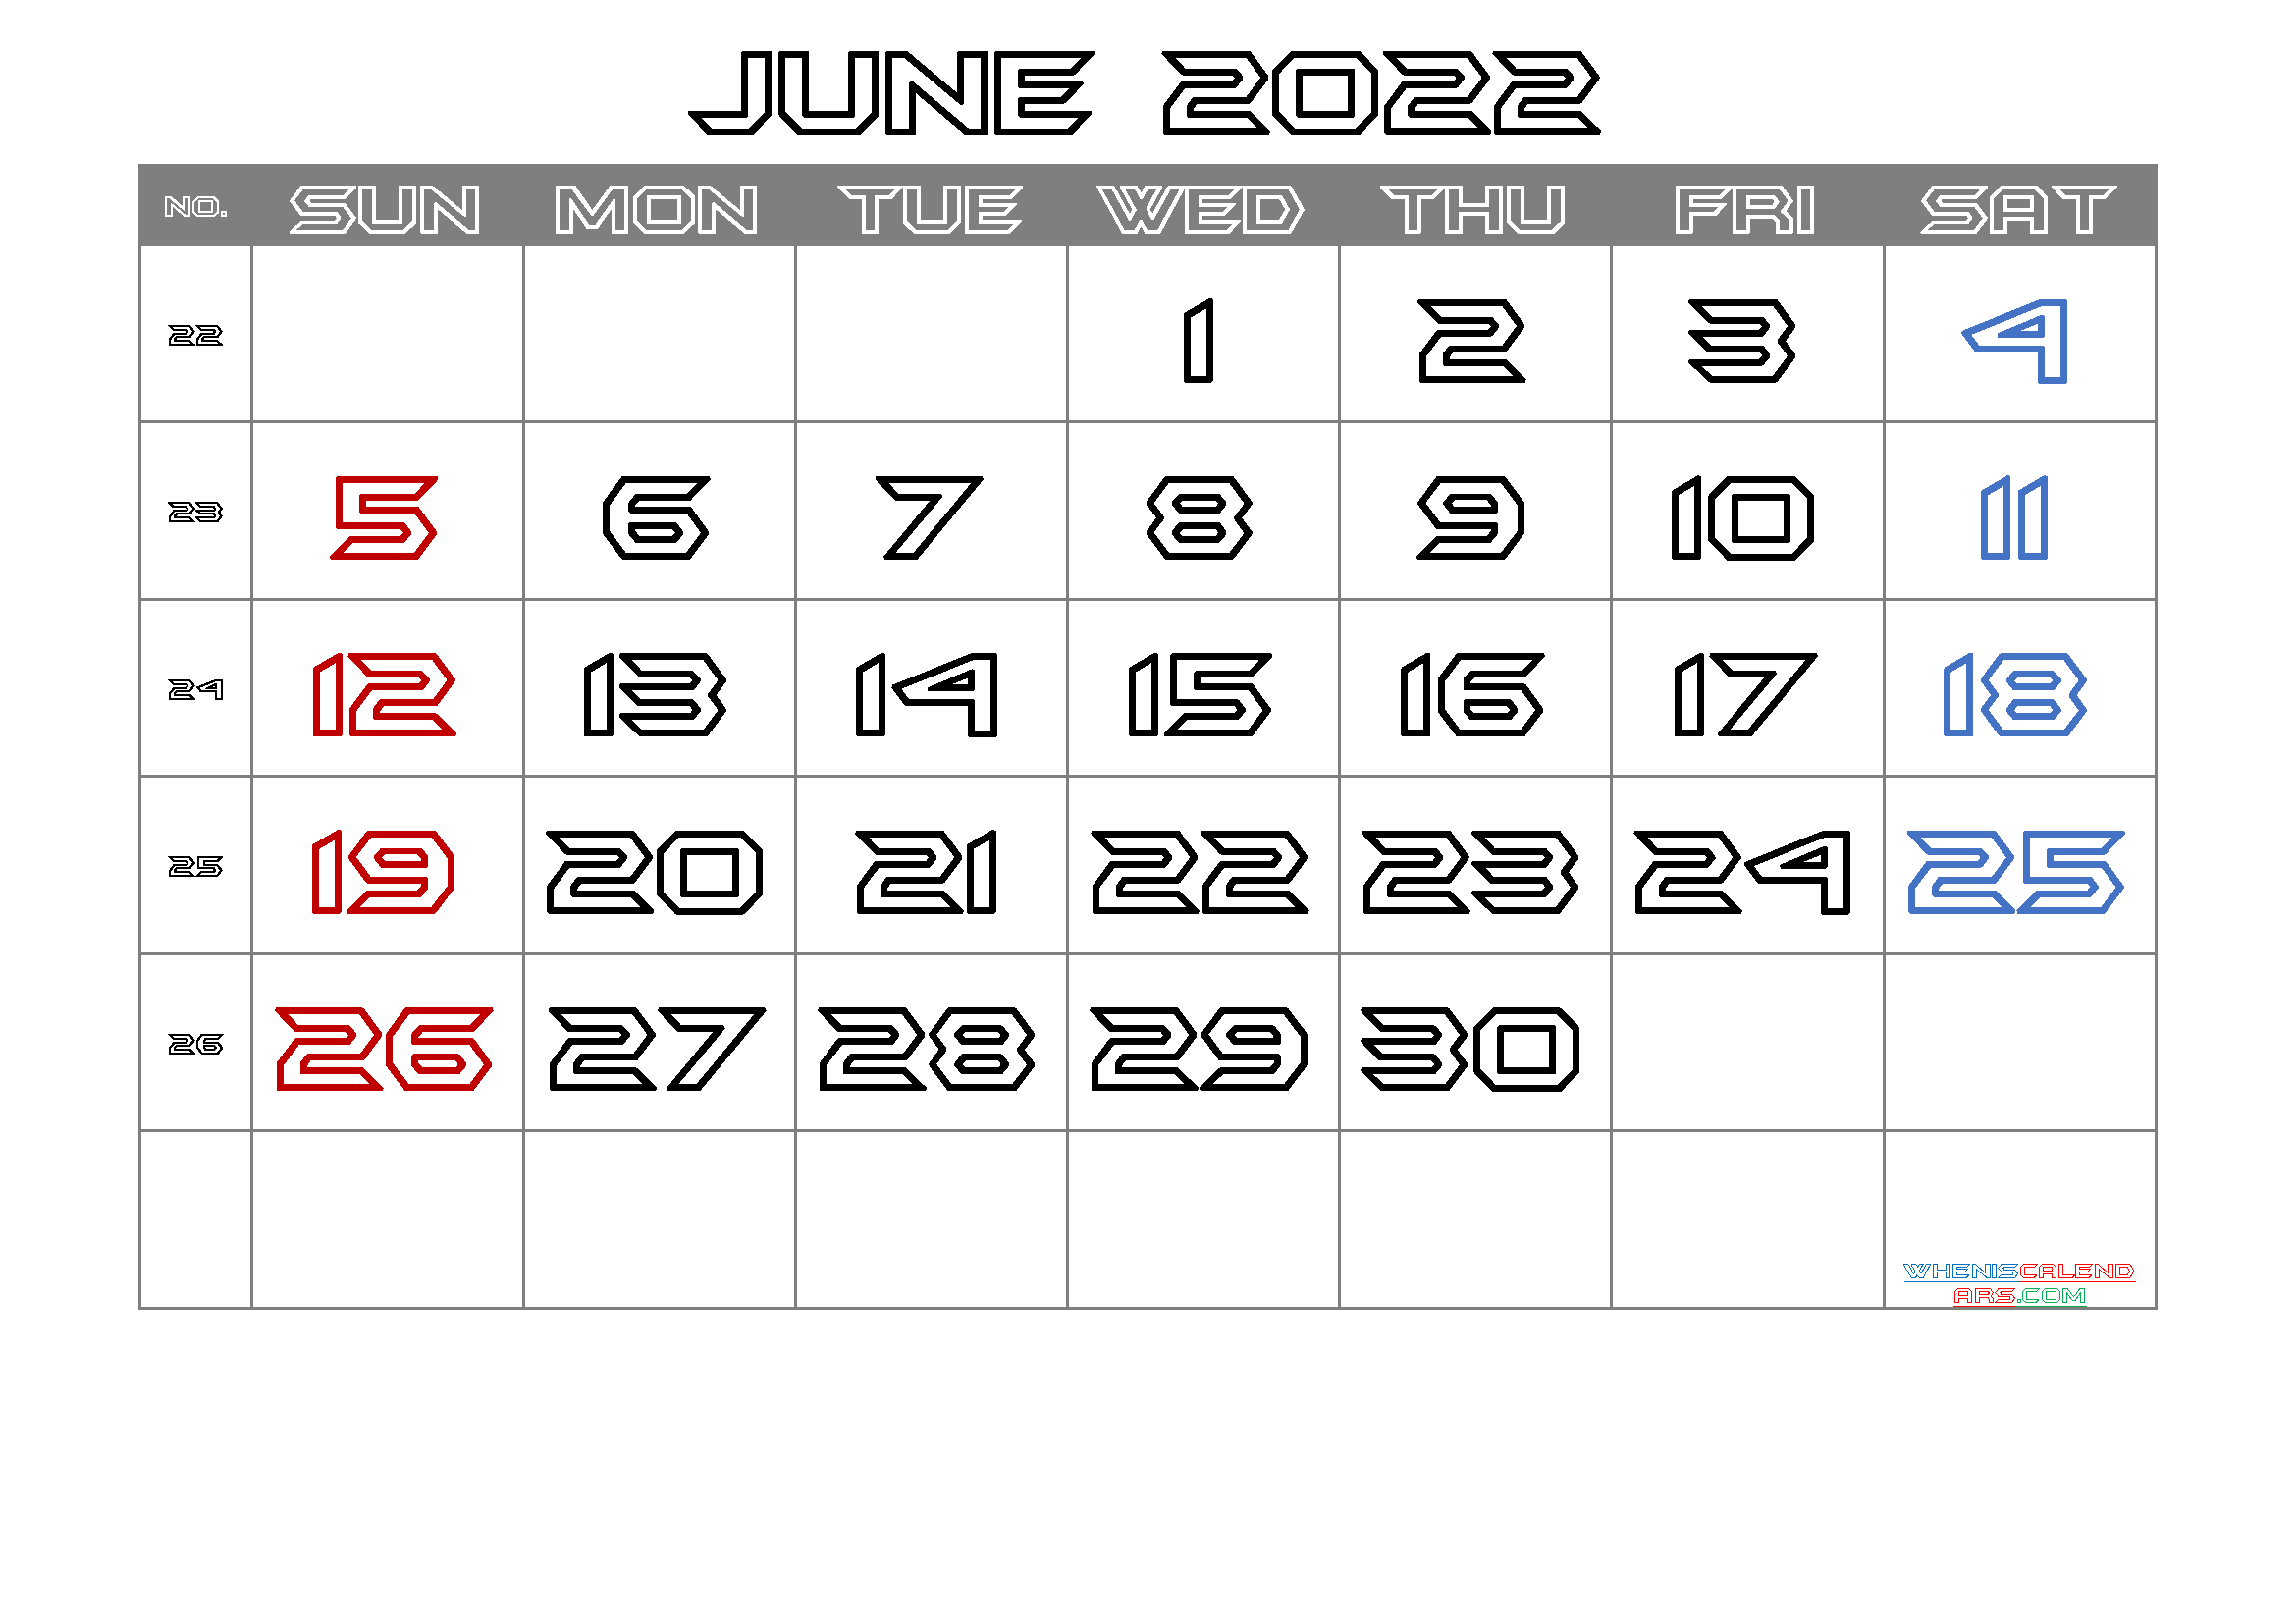 Free June 2022 Calendar PDF